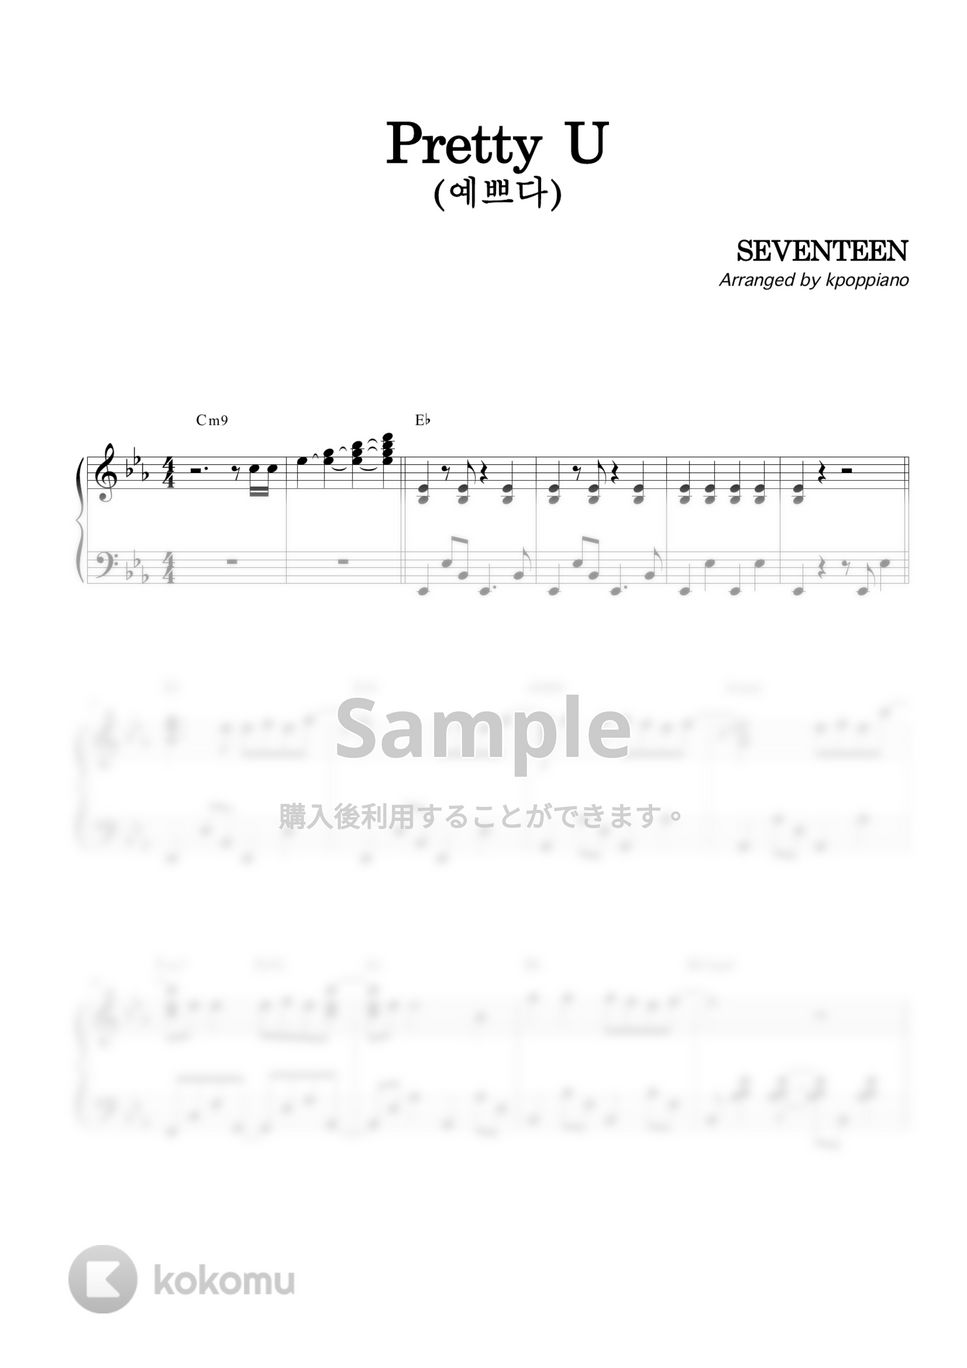 Seventeen - 綺麗だ (Pretty U) by KPOP PIANO